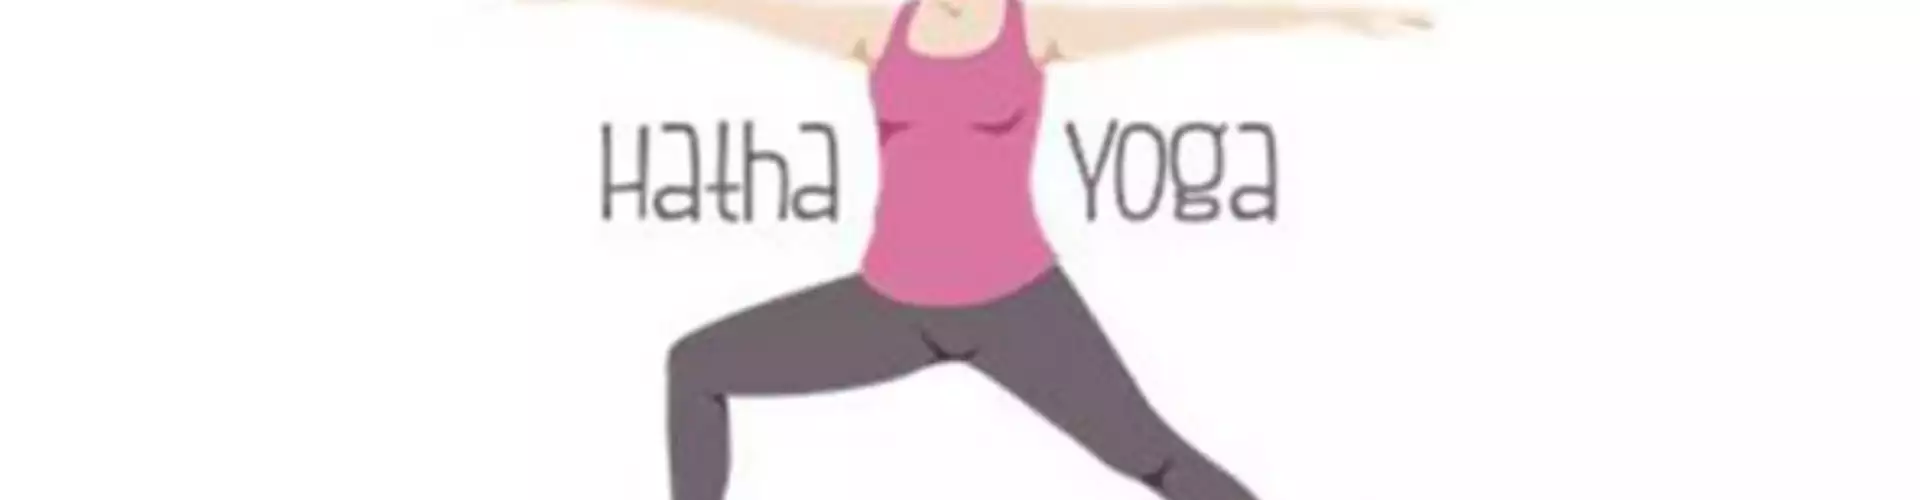 Daily Hatha Yoga